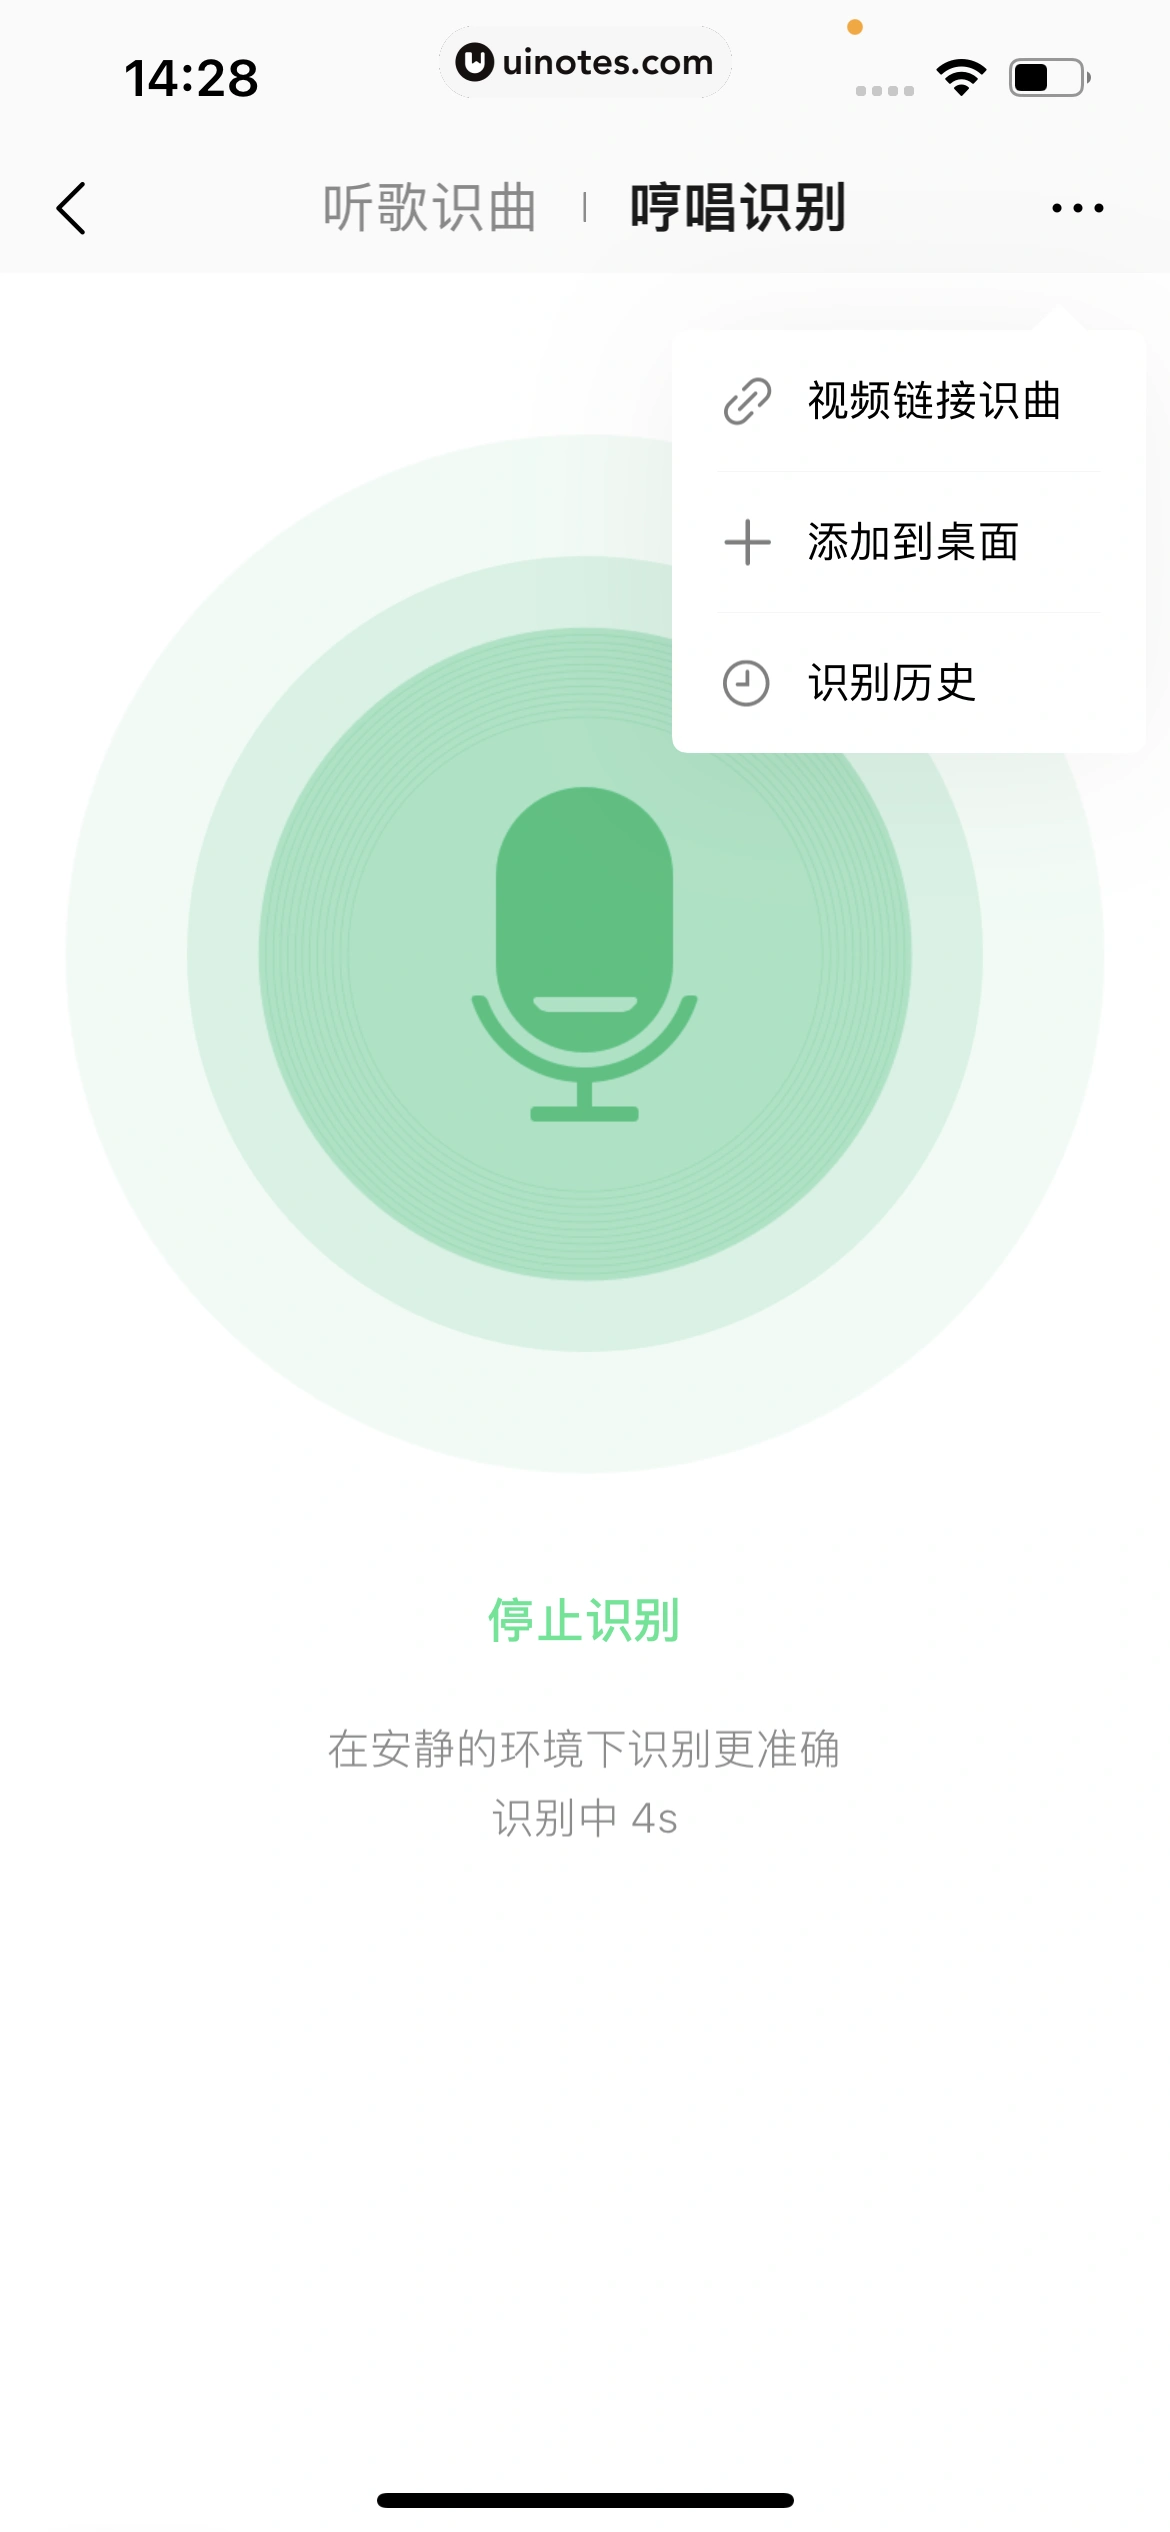 QQ音乐 App 截图 031 - UI Notes